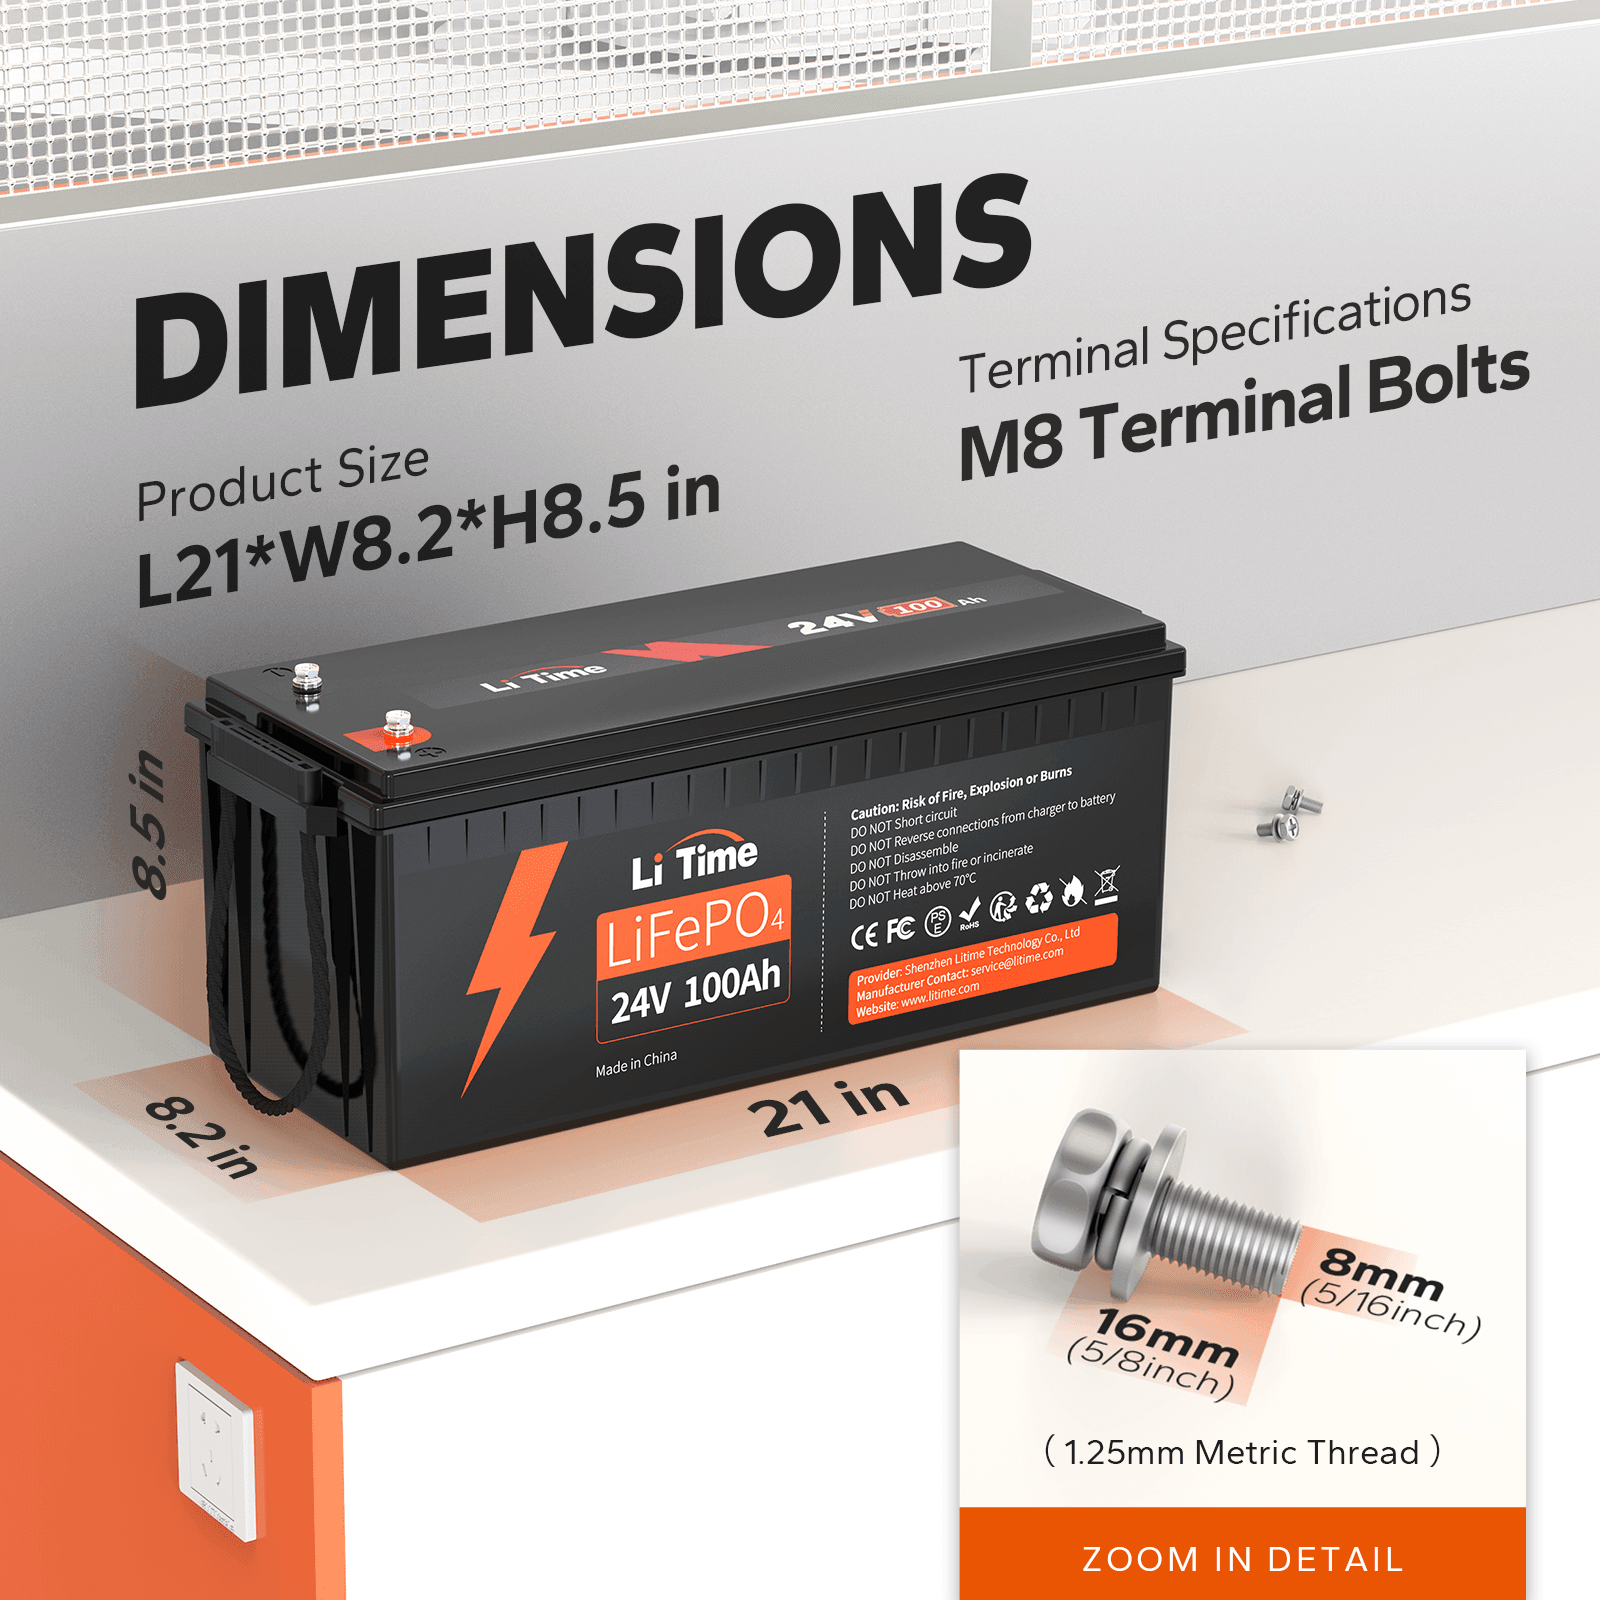 LiTime 24V 100Ah LiFePO4 Lithium Battery dimensions